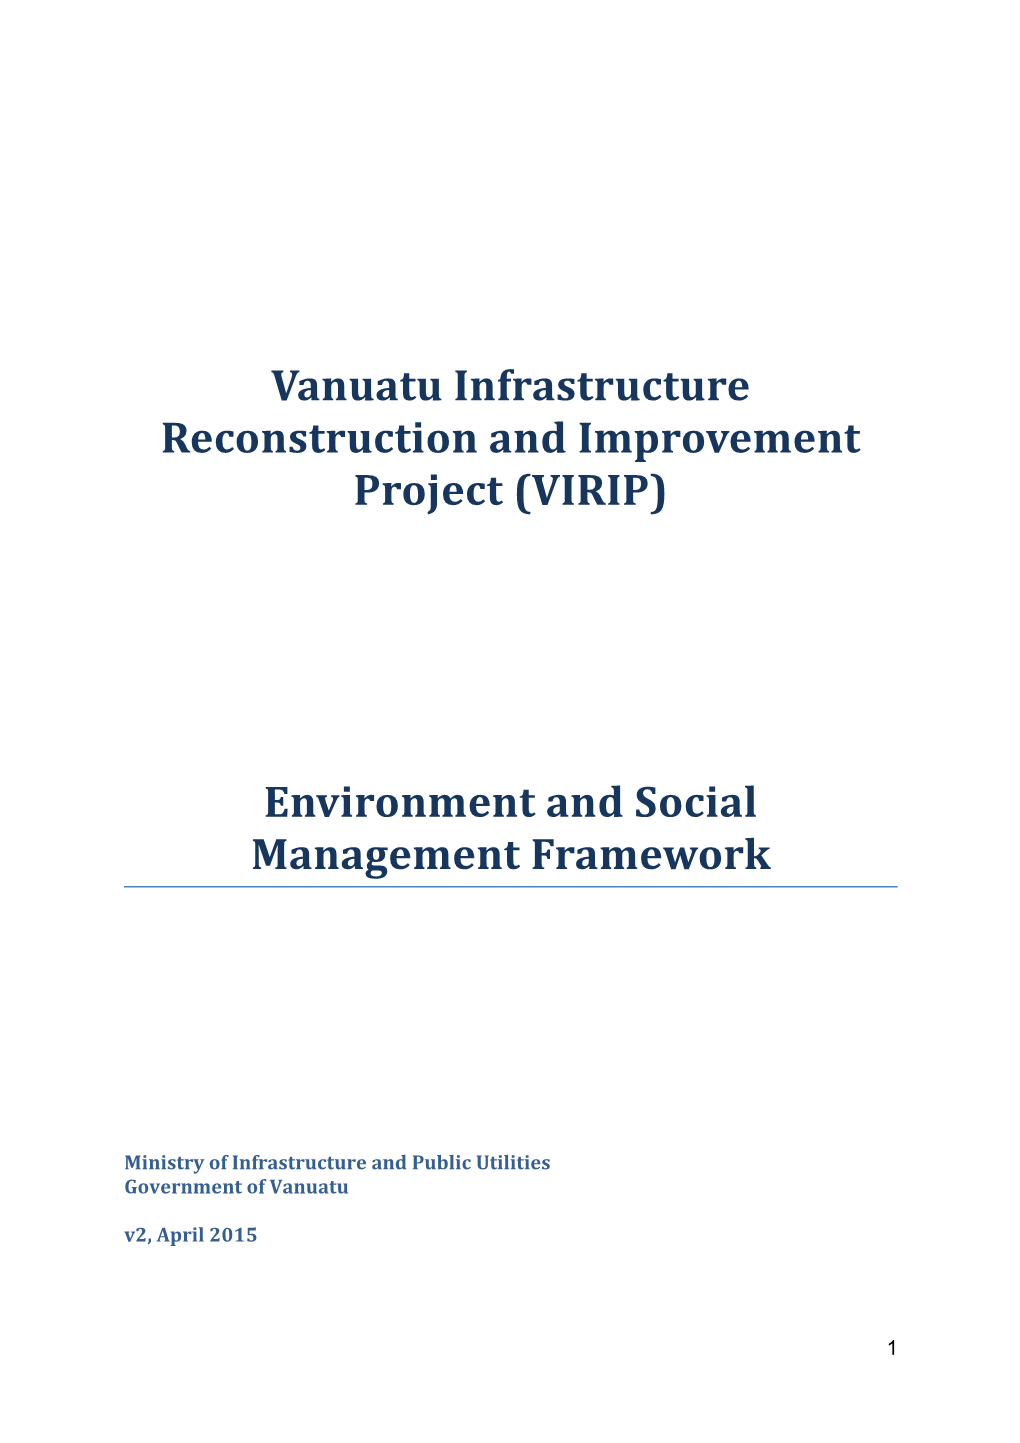 Vanuatu Infrastructure Reconstruction and Improvement Project (VIRIP)